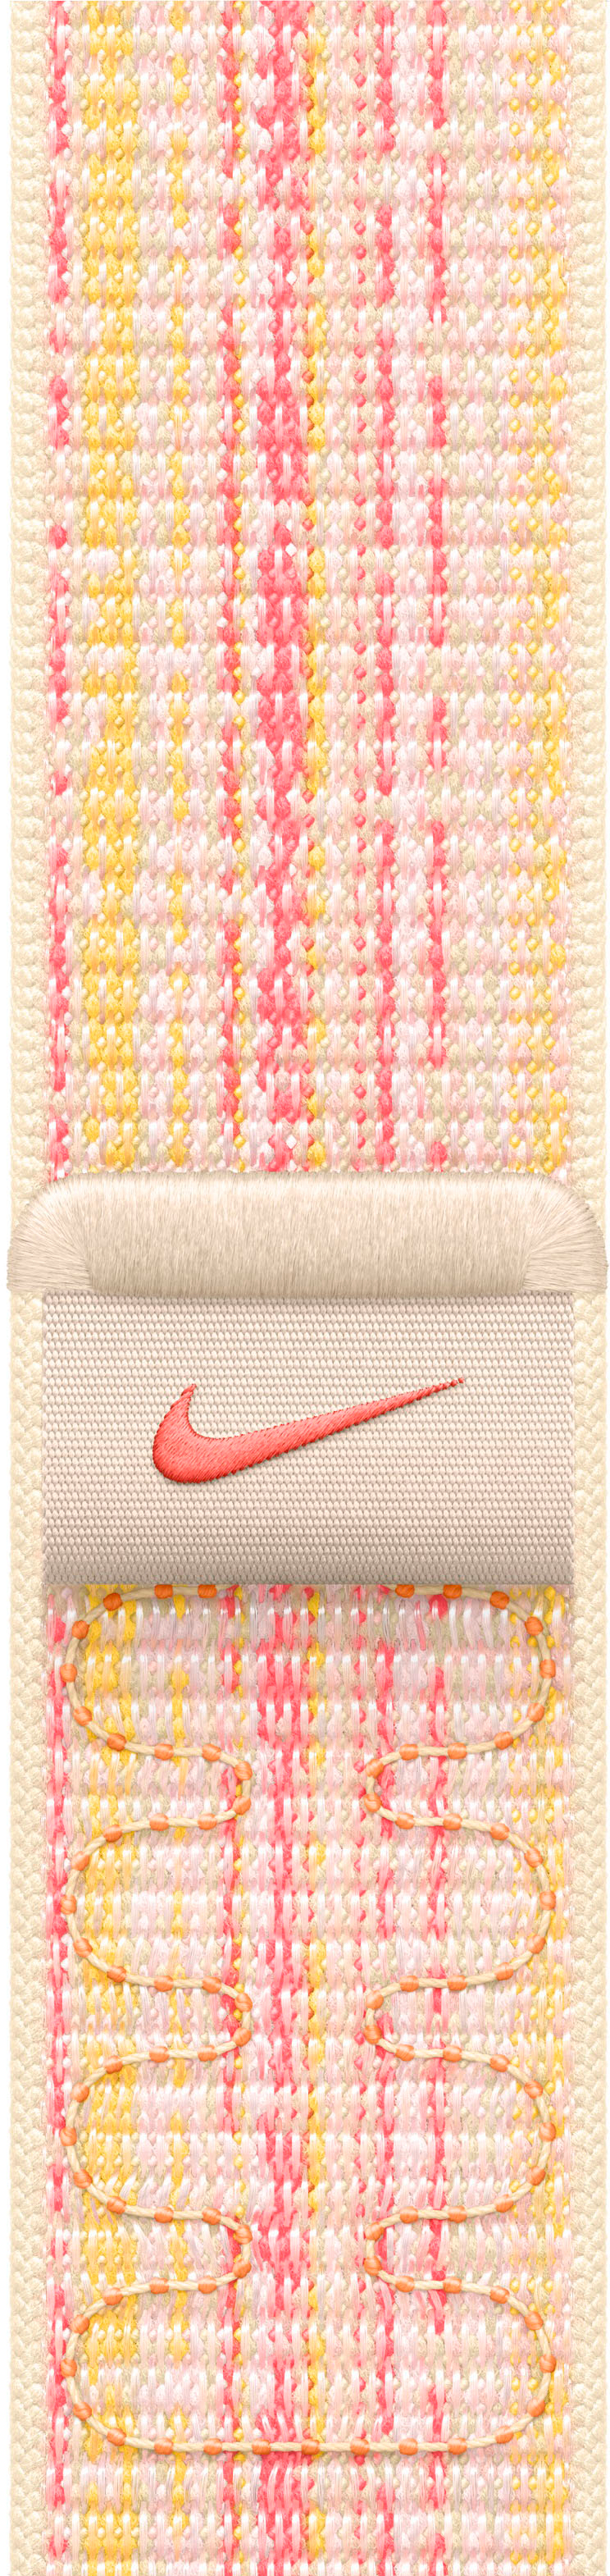 Nike Sports Loop starlight/pink : r/AppleWatch